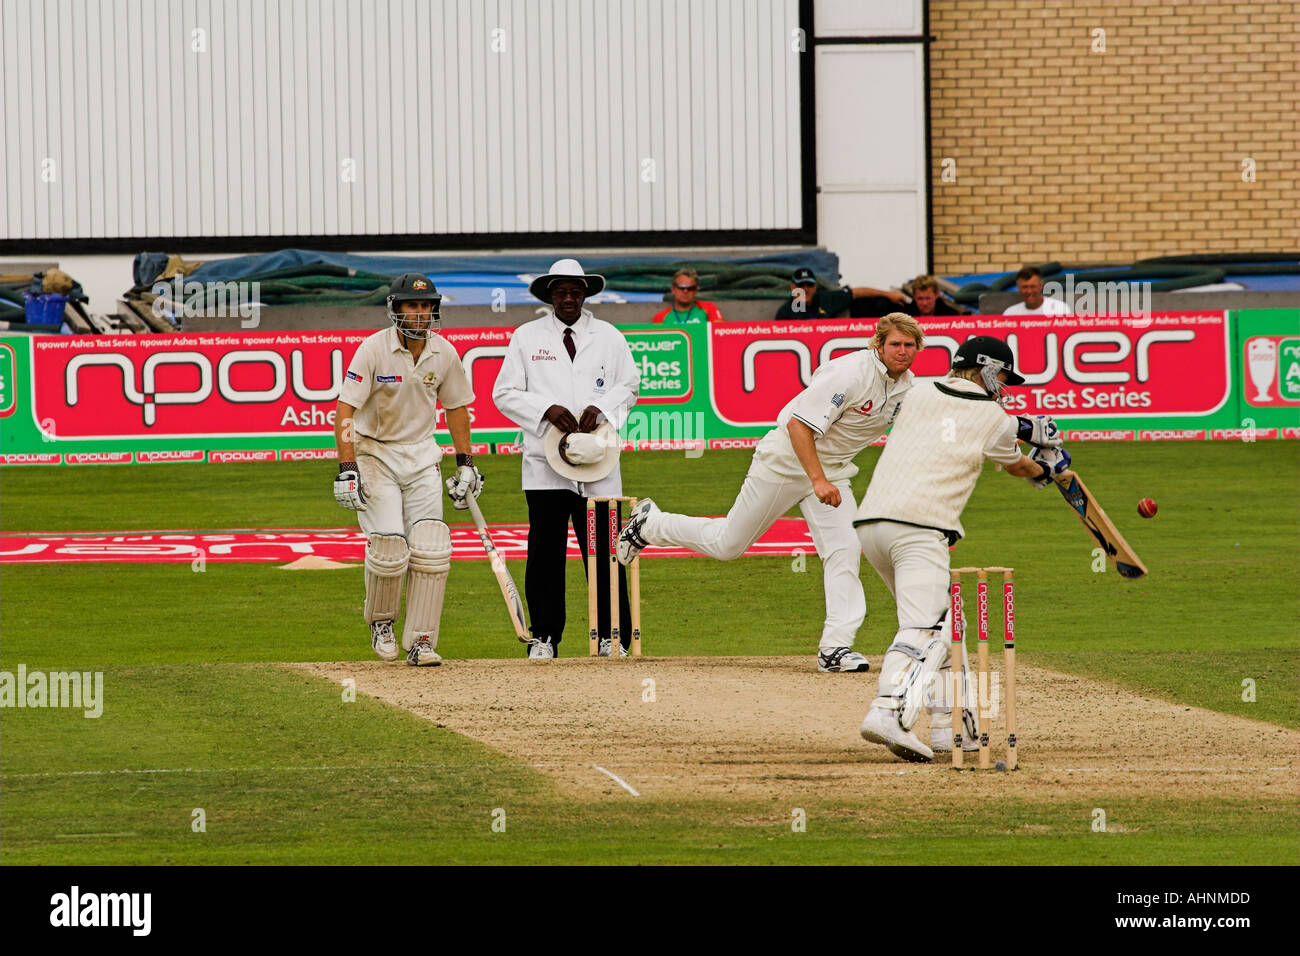 Matthew Hoggard bowling during a cricket game. Stock Photo